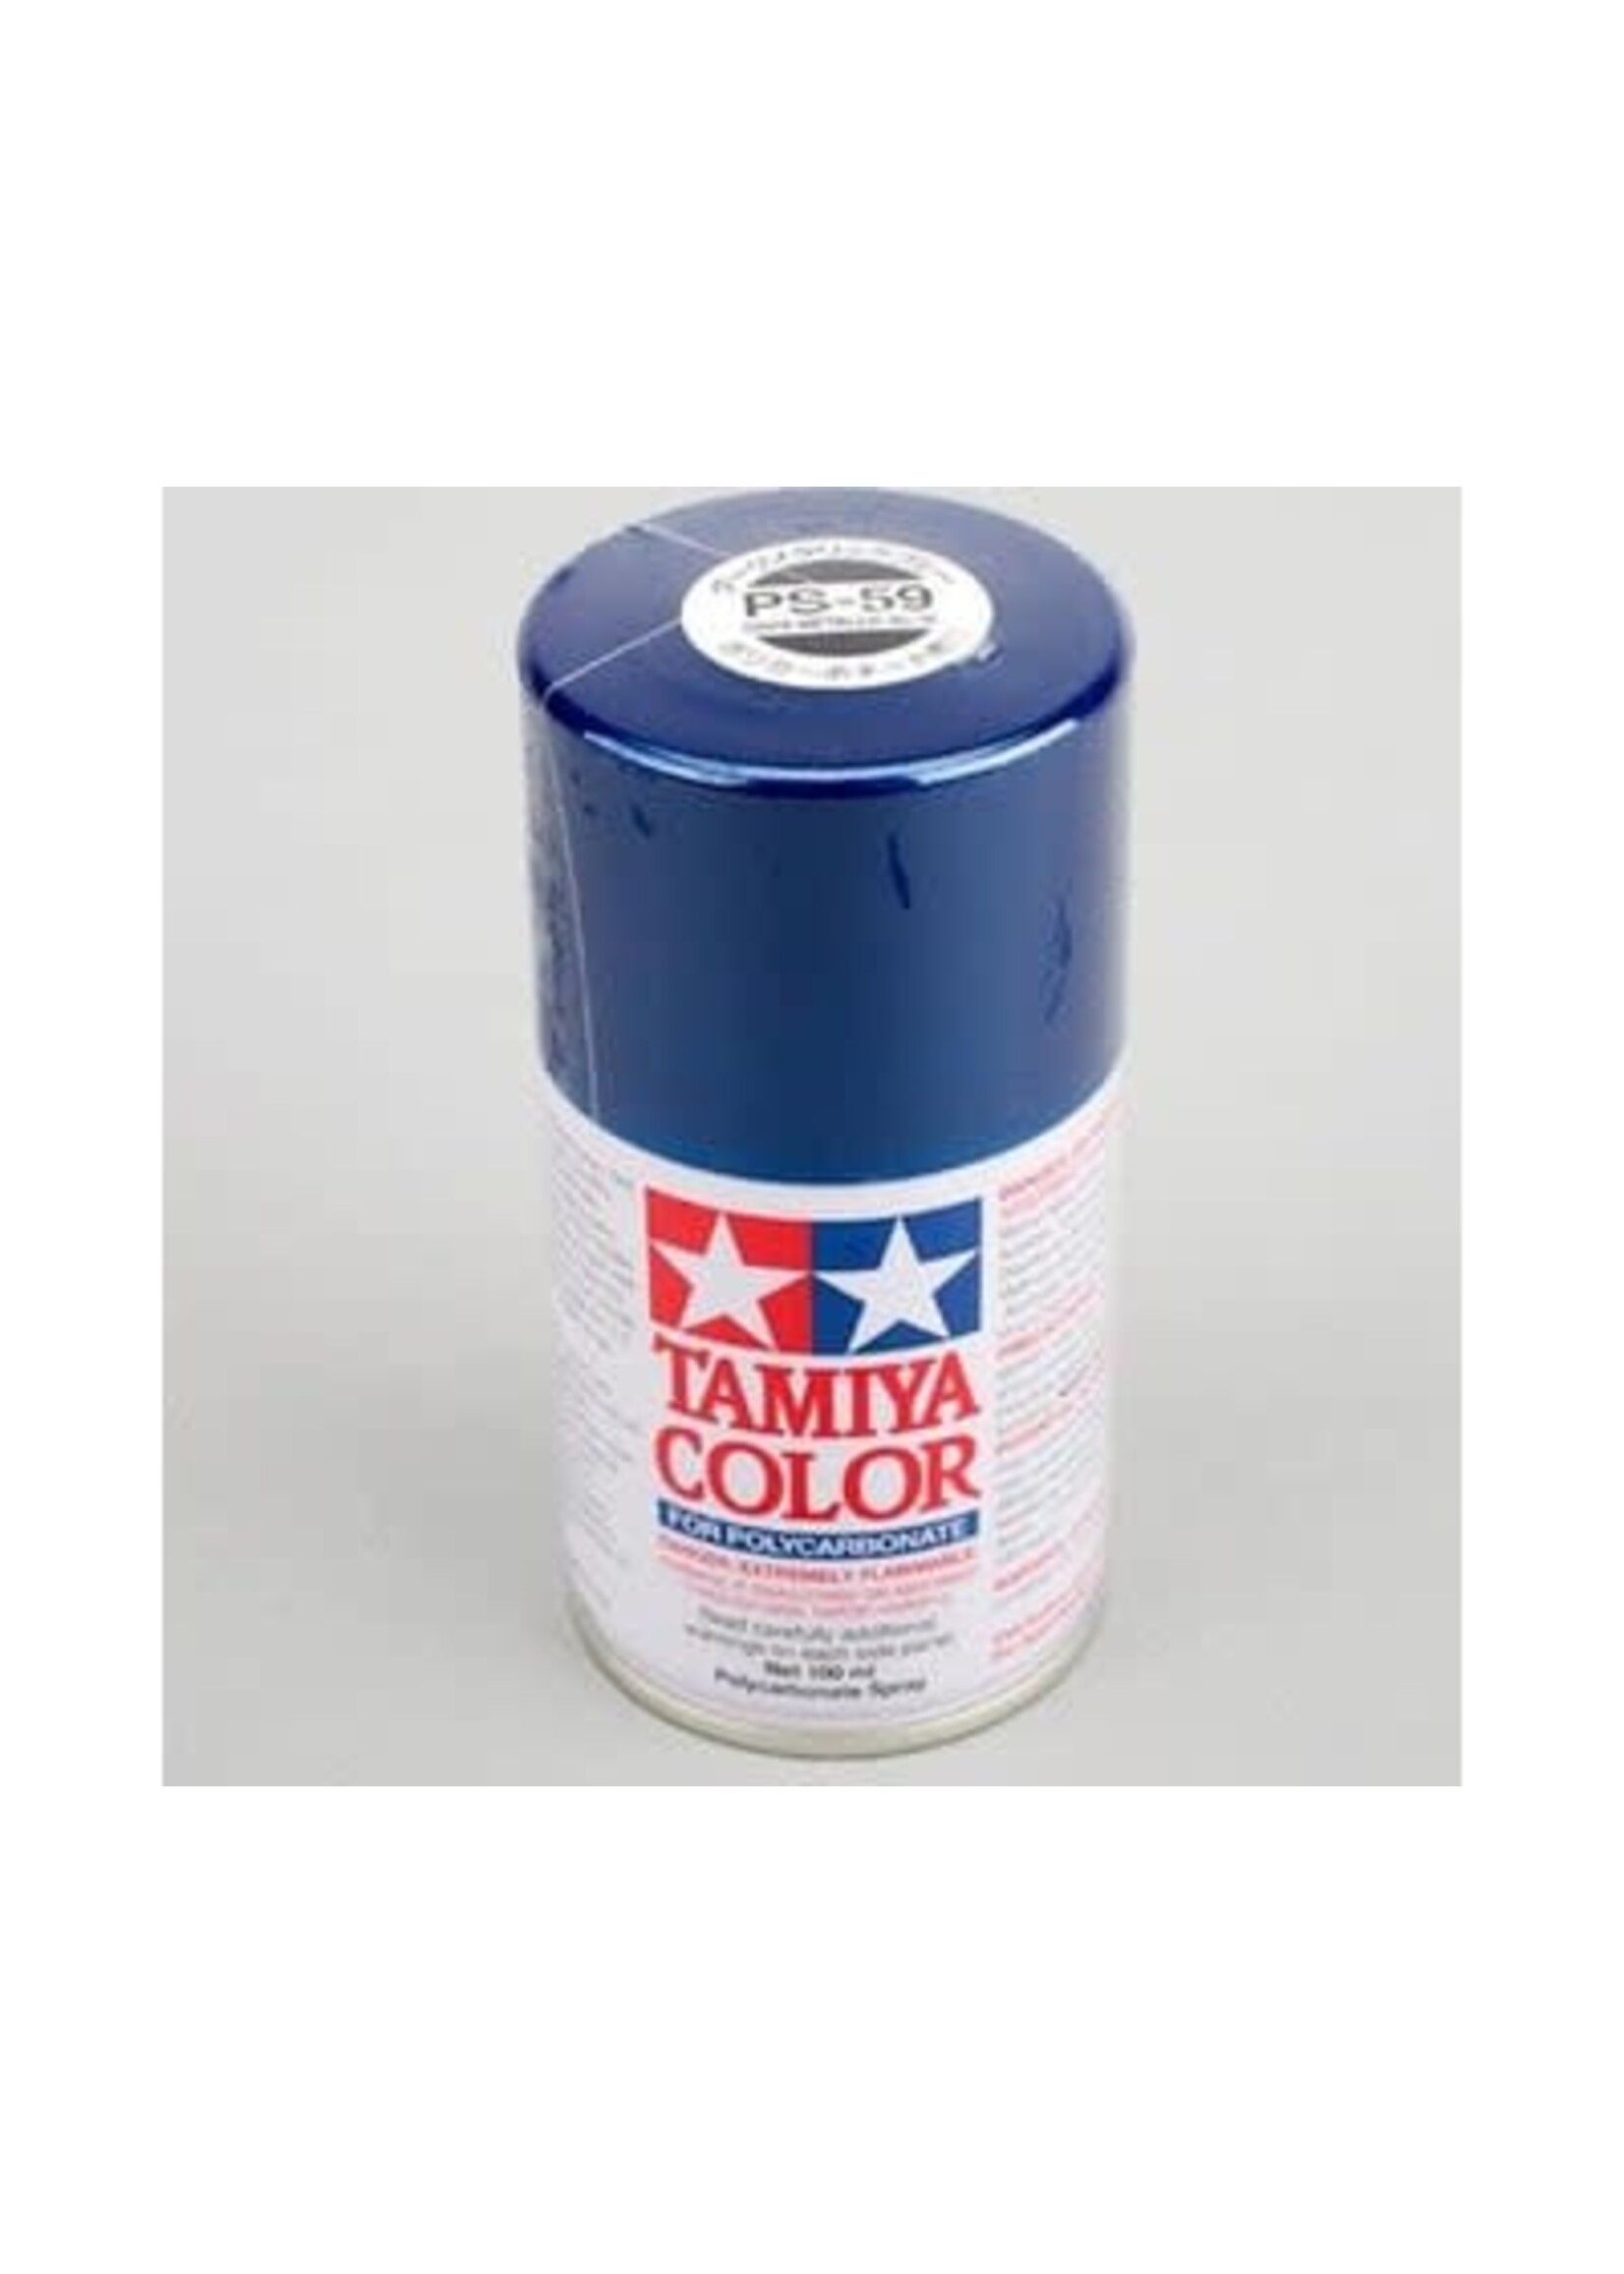 Tamiya TAM86059 Tamiya PS-59 Dark Metallic Blue Lexan Spray Paint (100ml)